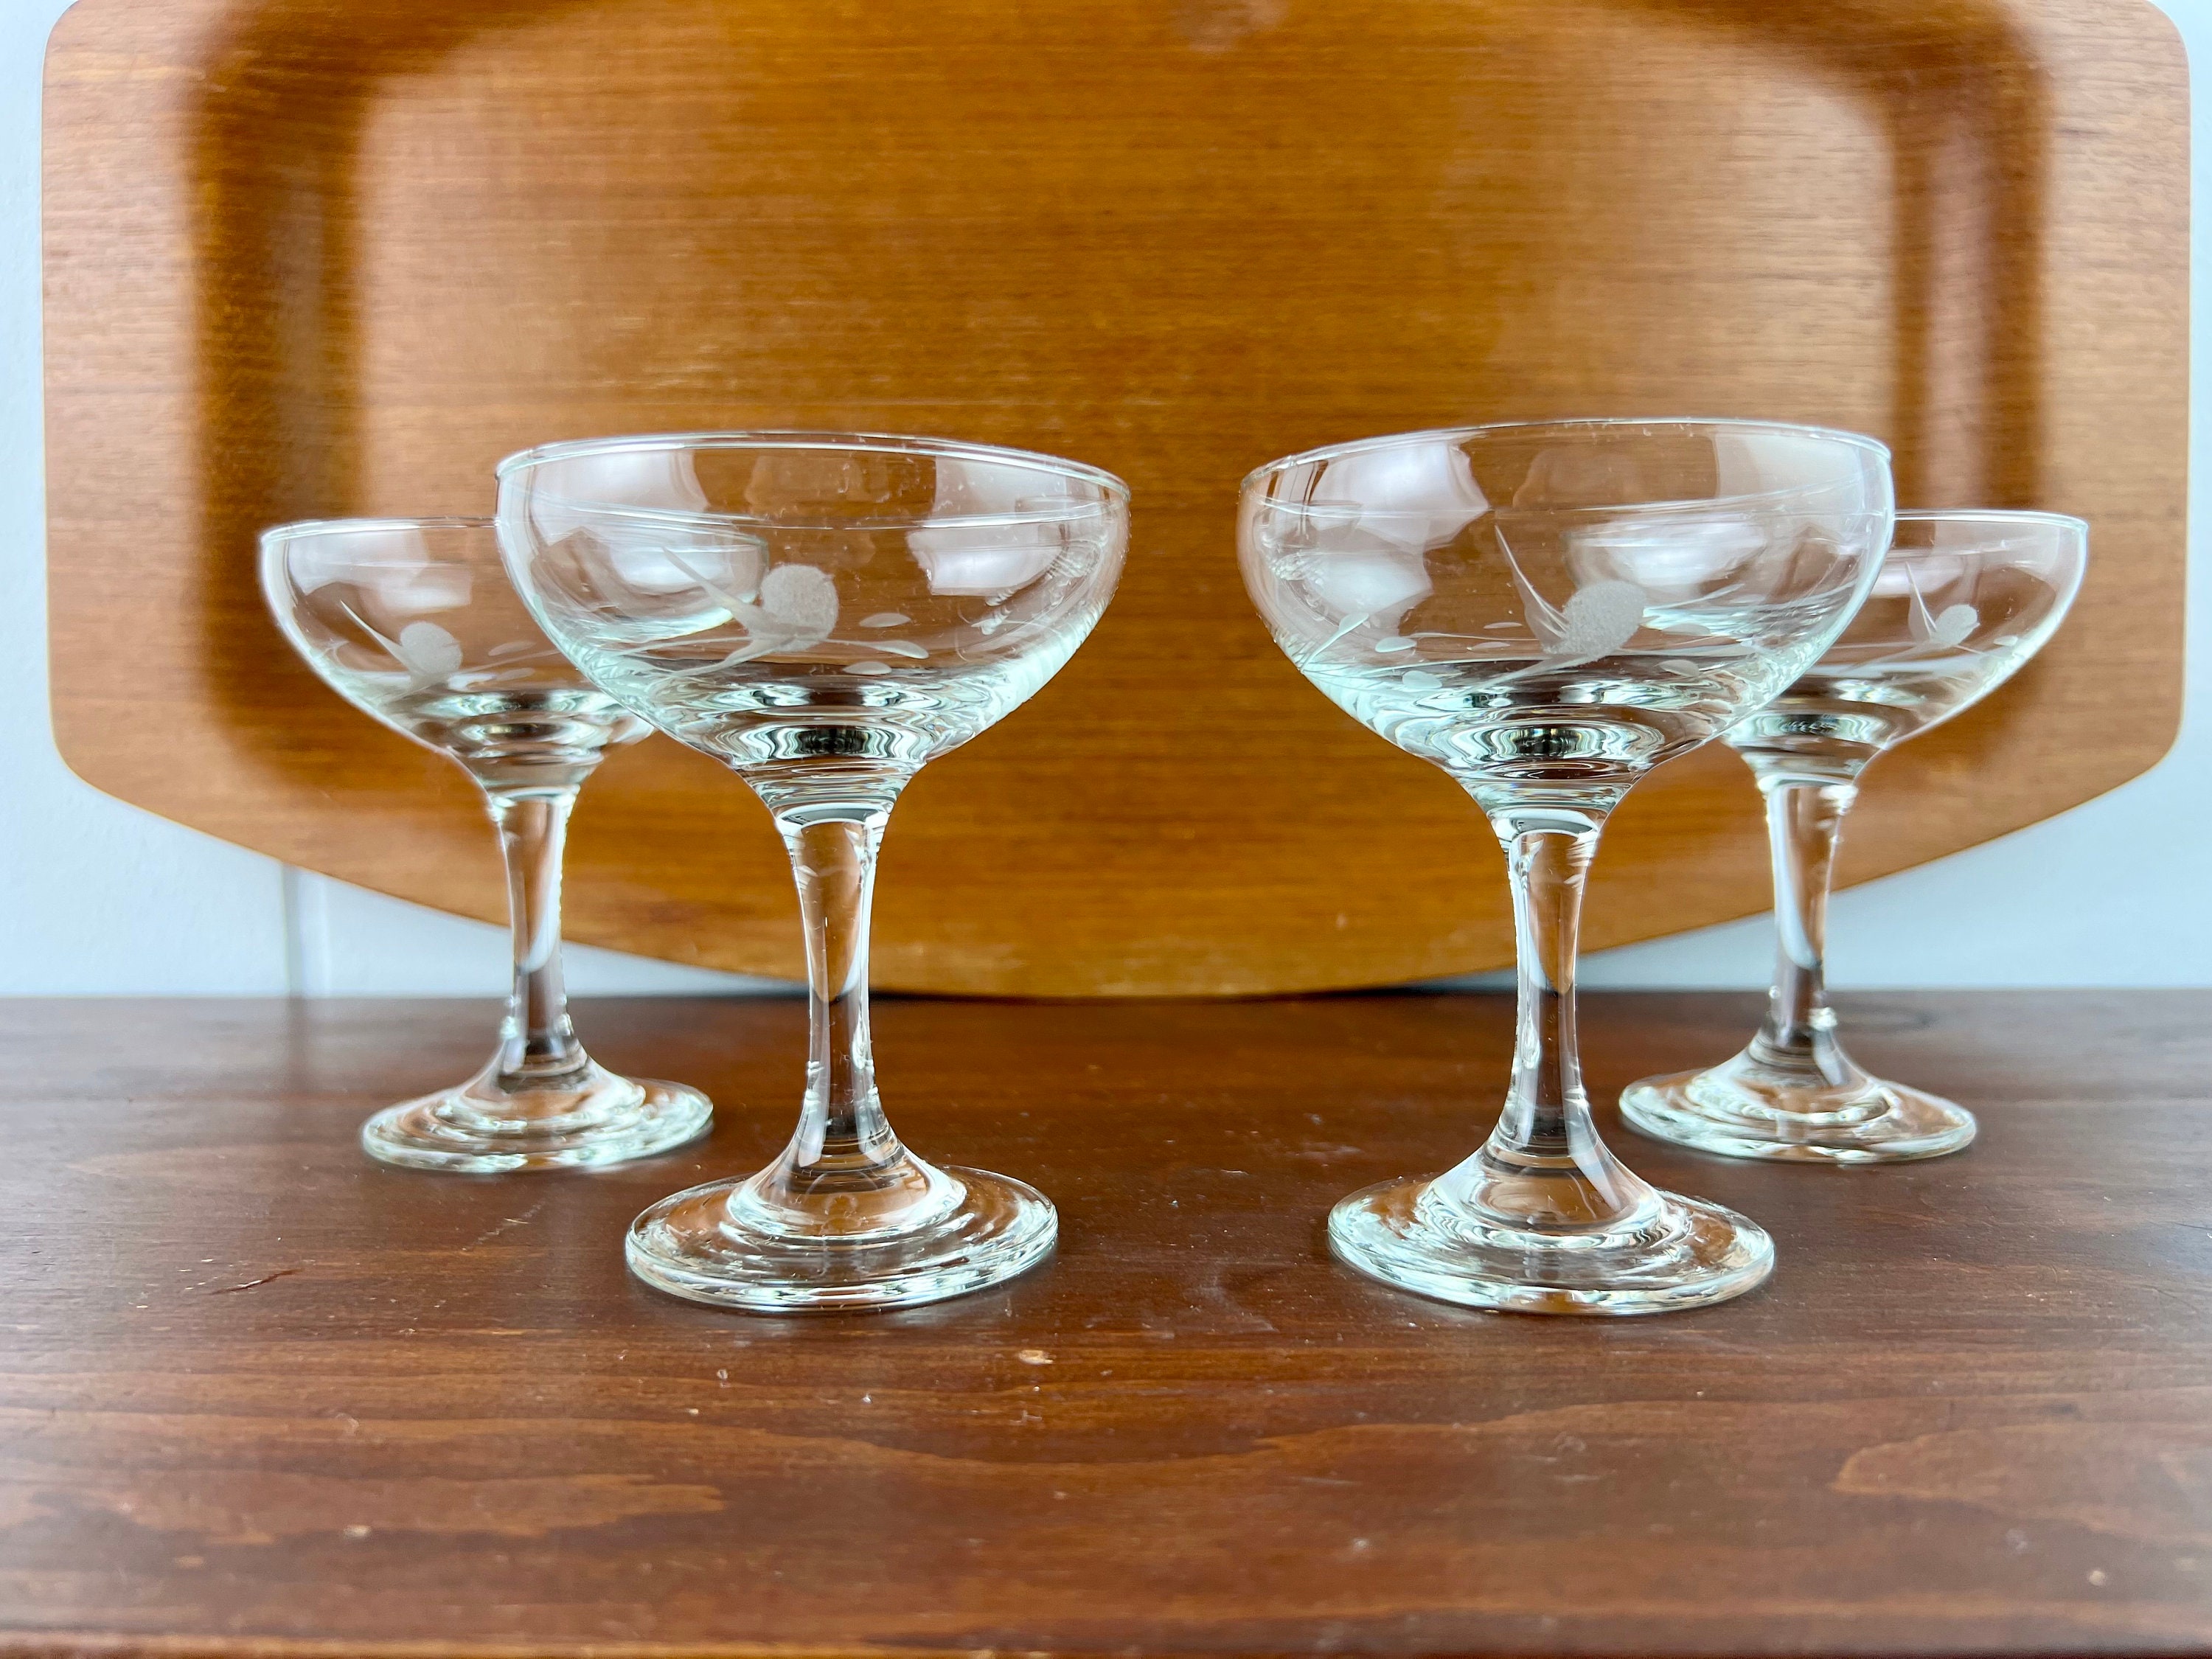 Classic Monogram Stemless Champagne Flutes & Wine Glasses - GB Design House